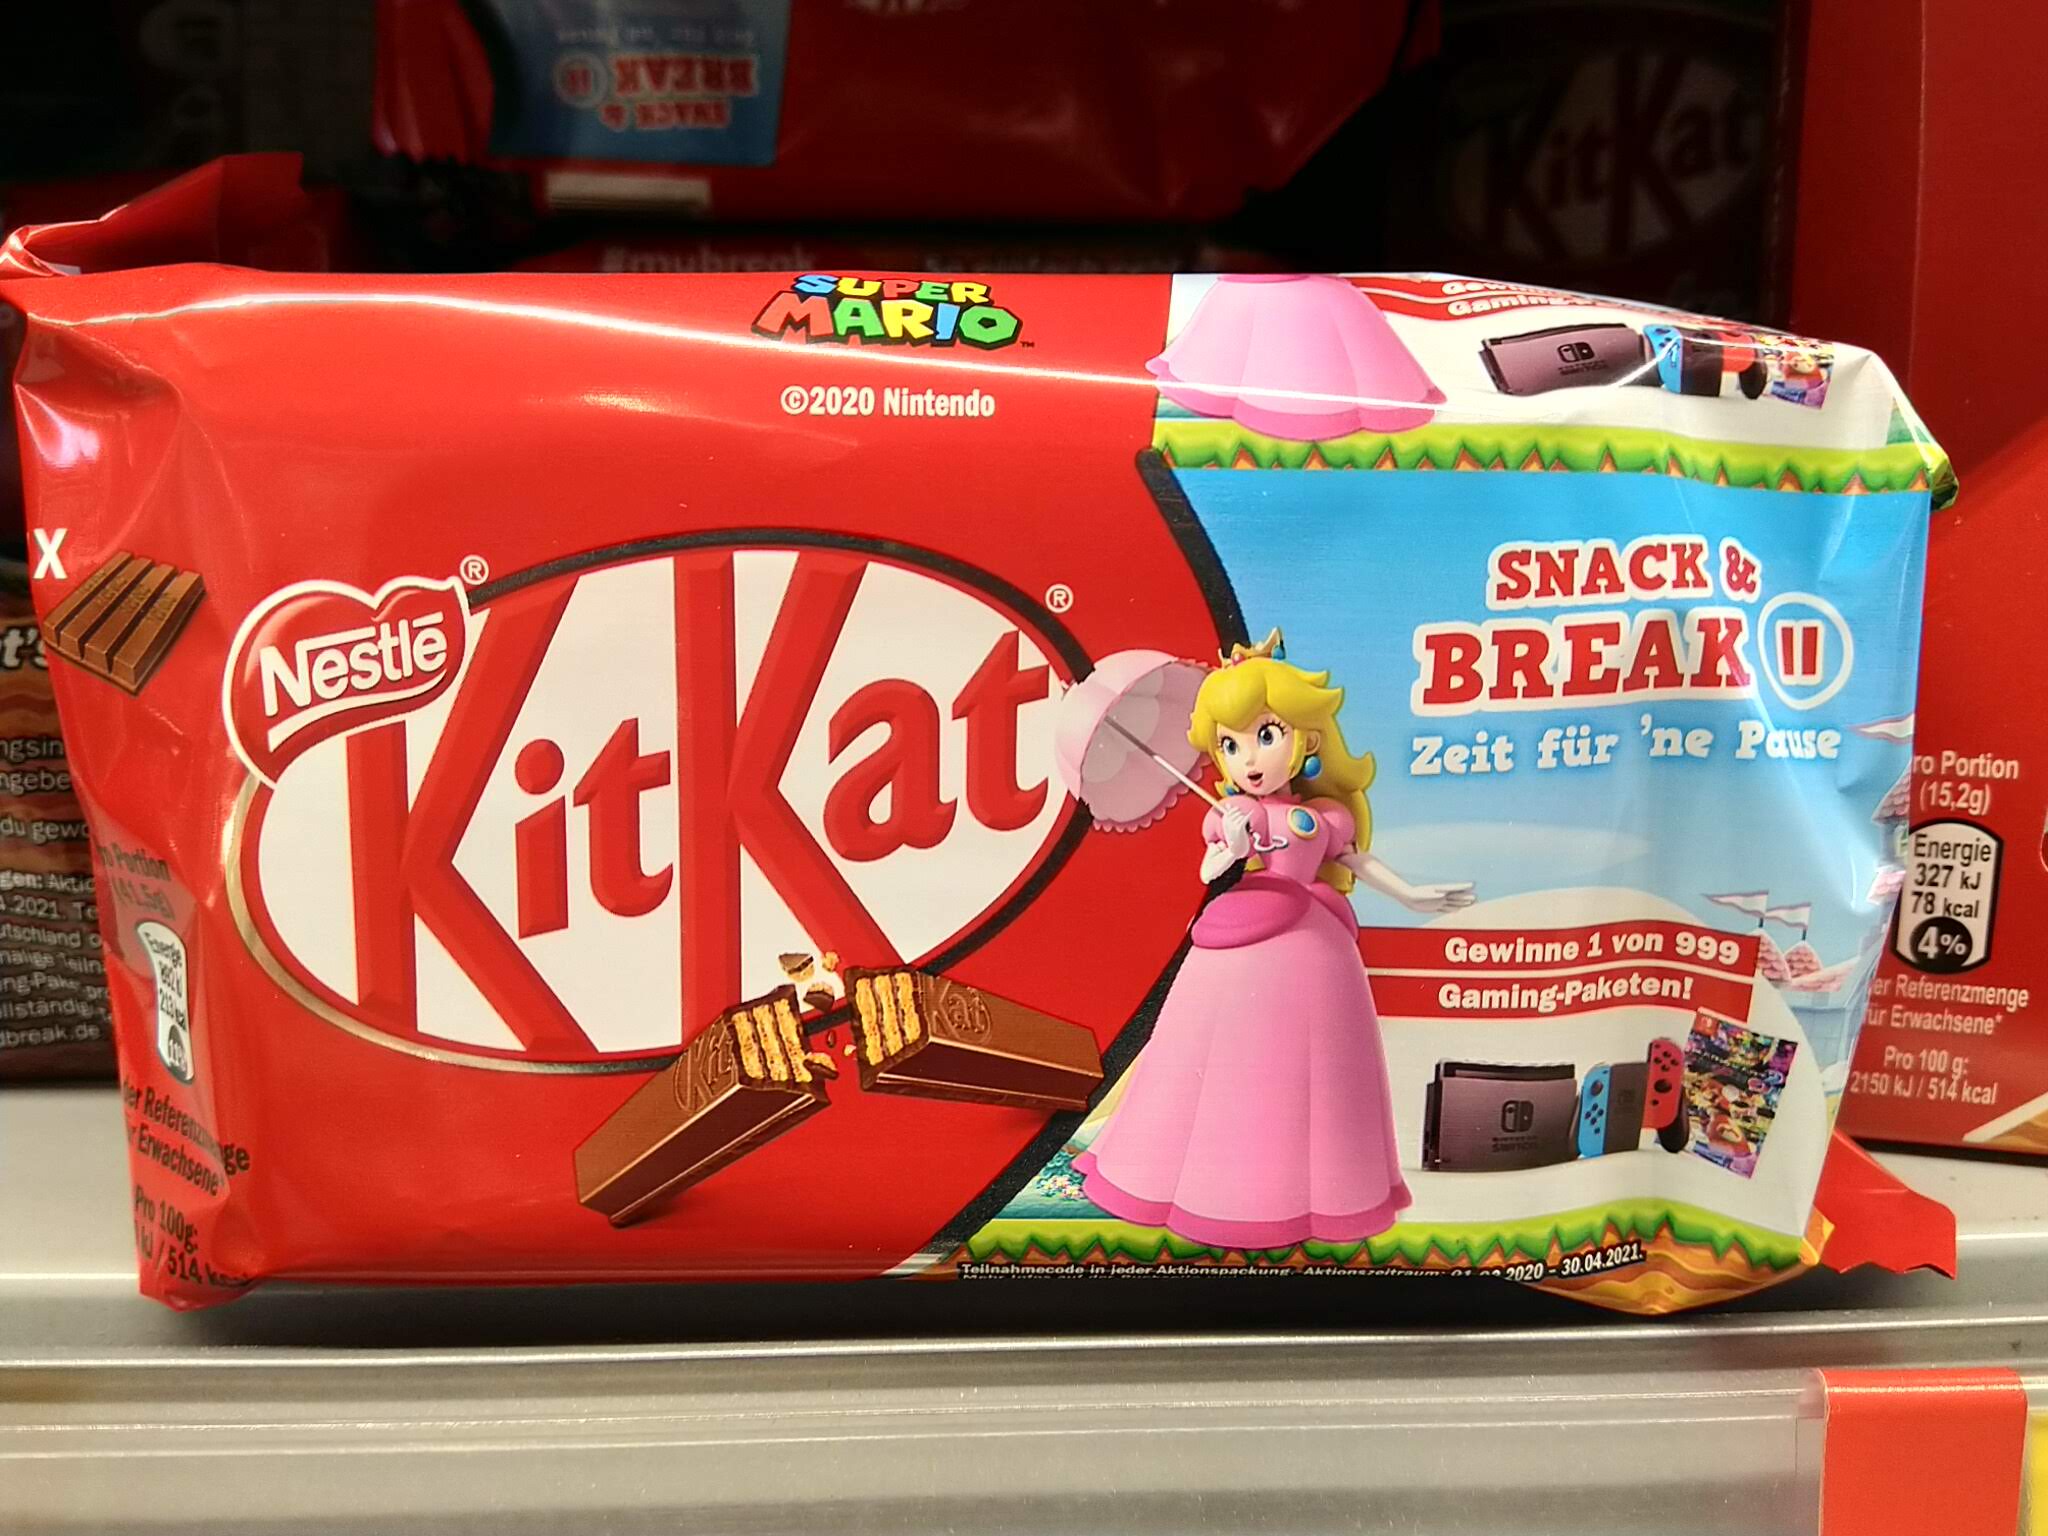 KitKat Lion: Play and break - Gaming-Paket Nintendo Switch Konsole, Super Mario Go Kart 8 gewinnen